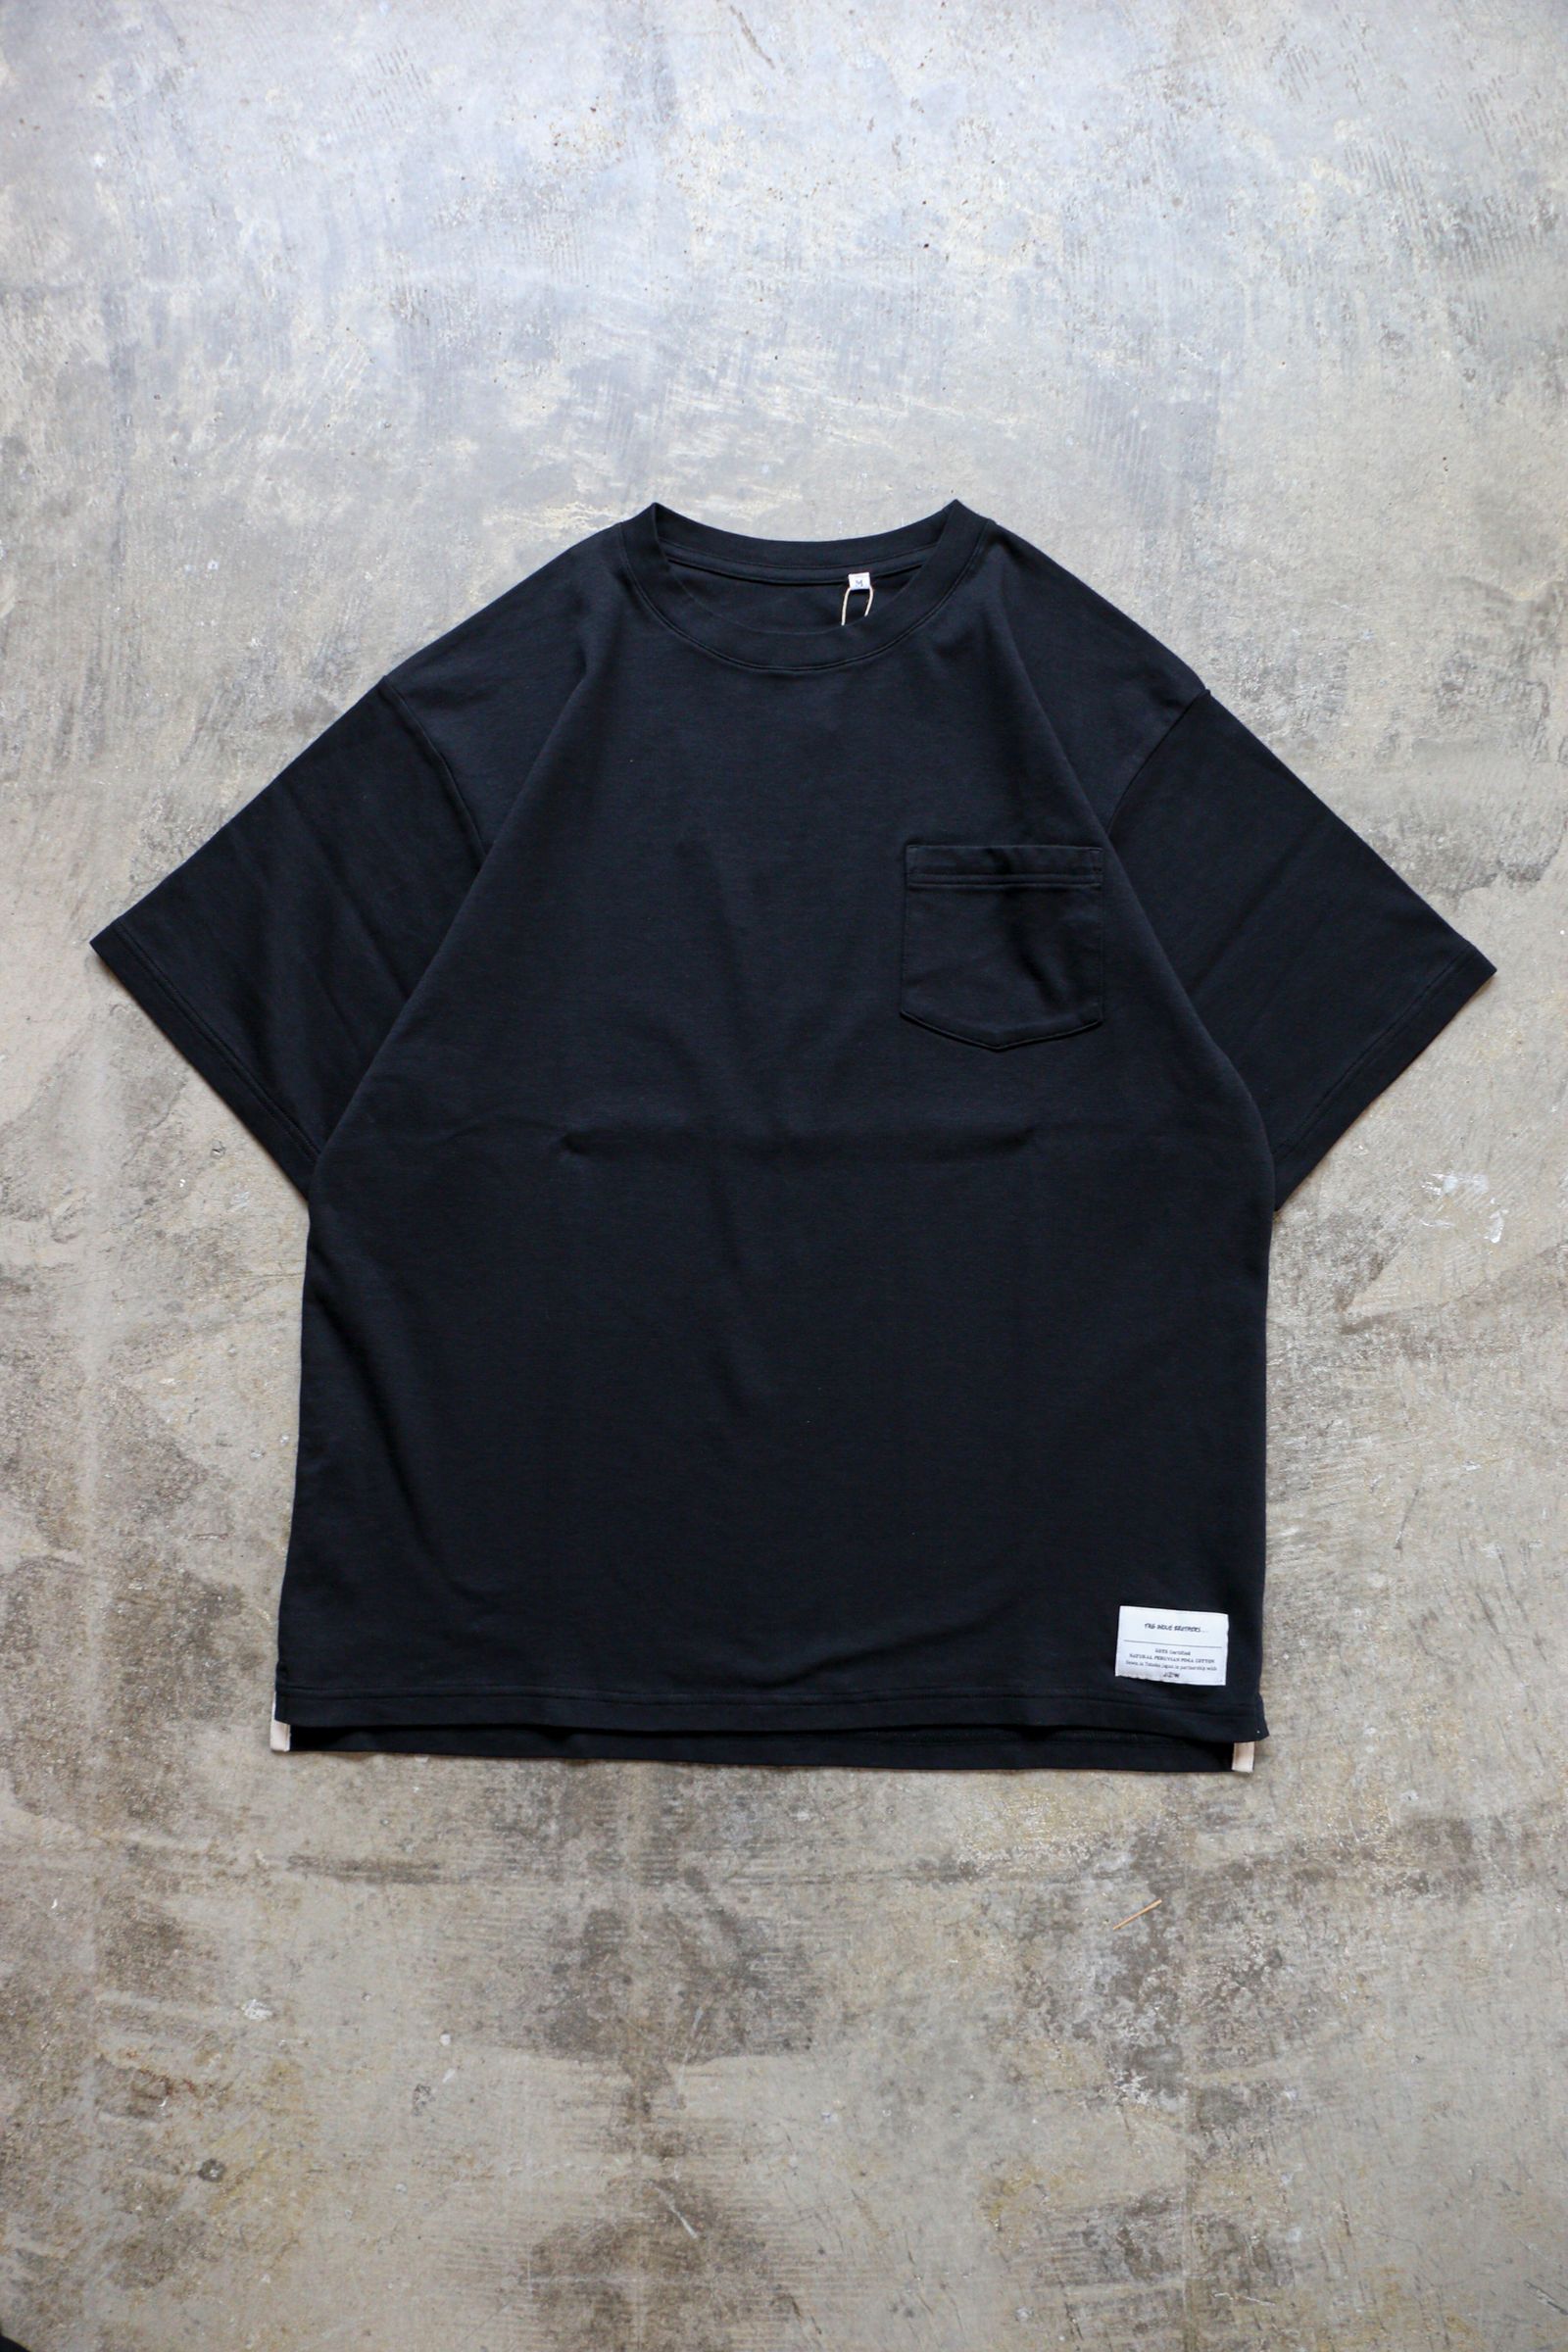 THE INOUE BROTHERS - Standard Pocket T-shirt Black | koko